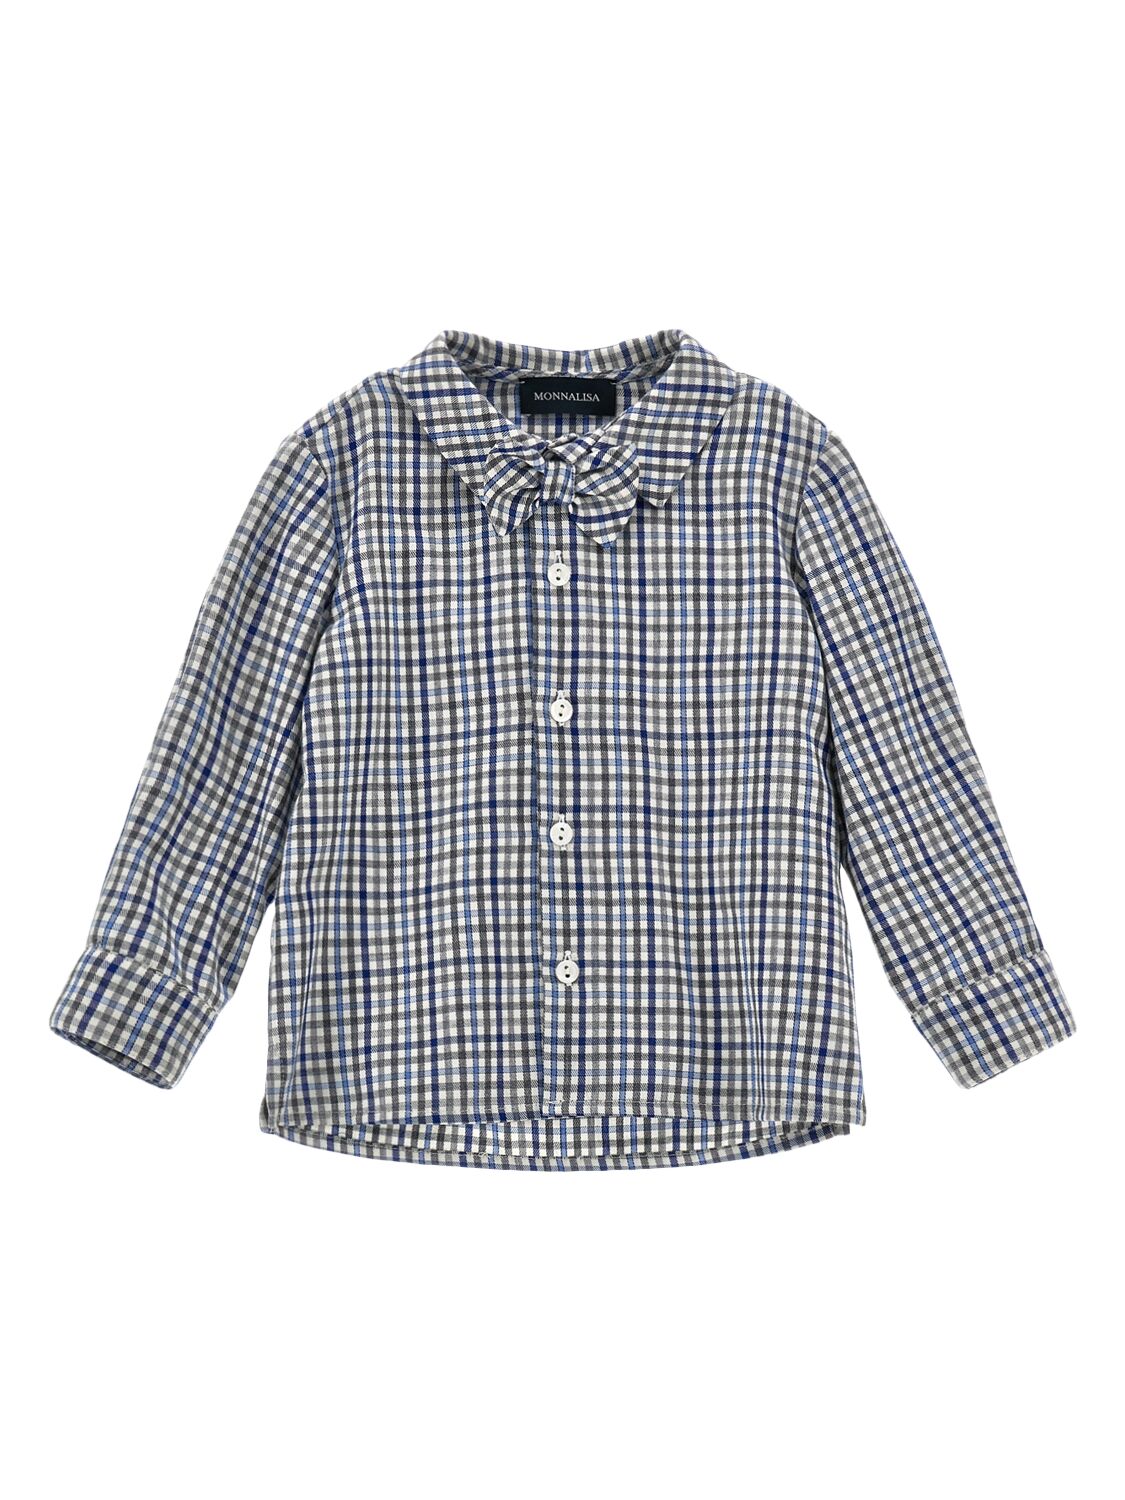 Monnalisa Check Print Cotton Poplin Shirt In Blue/grey